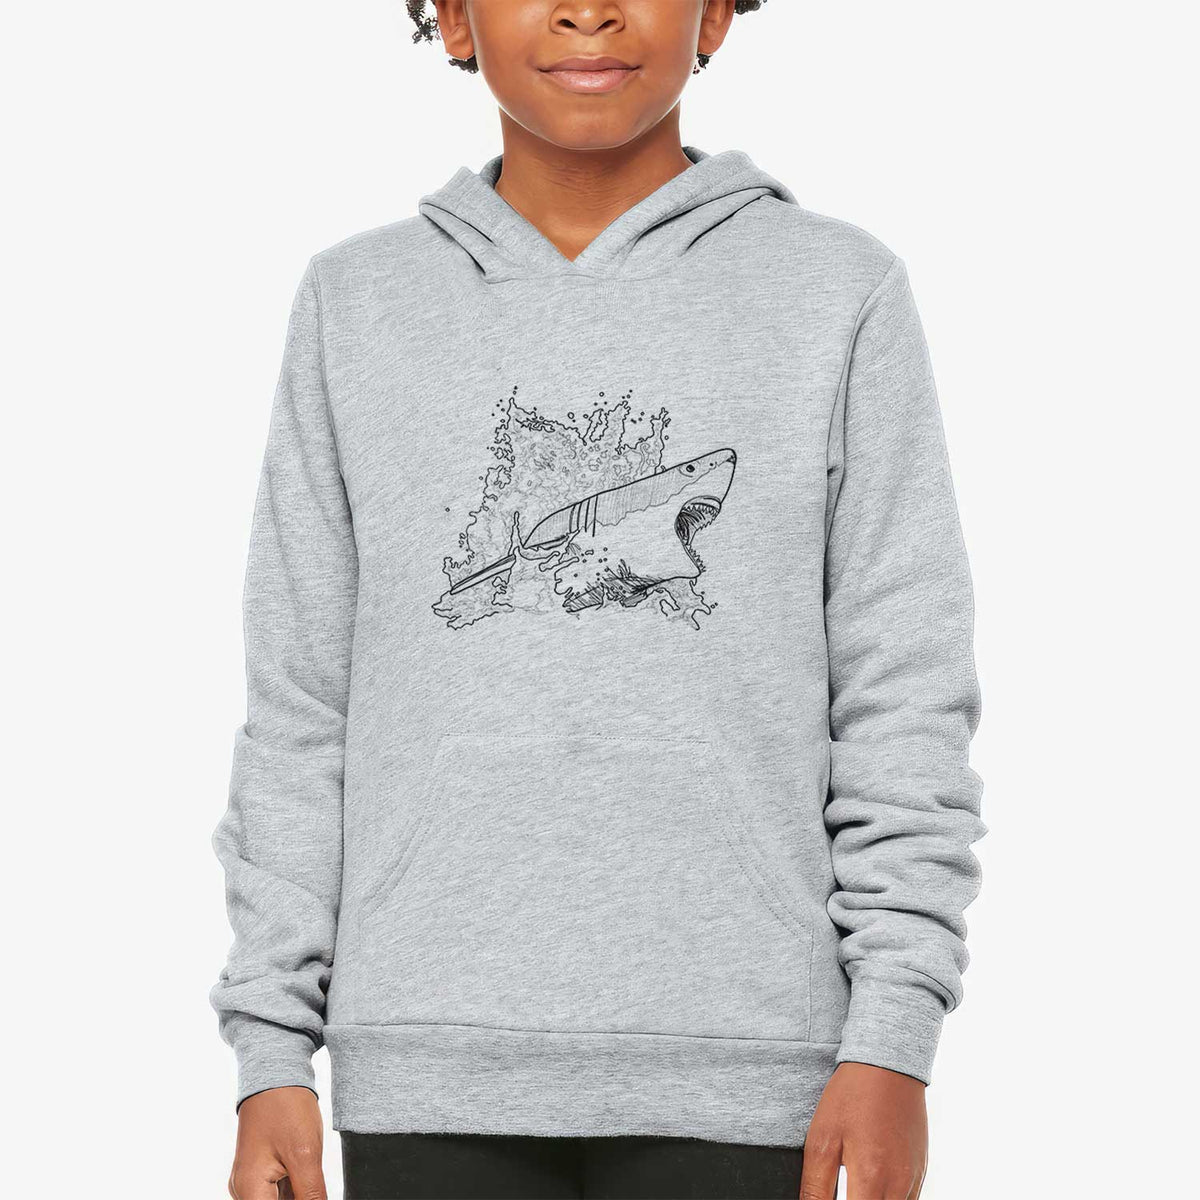 Great White Shark in Water - Youth Hoodie Sweatshirt